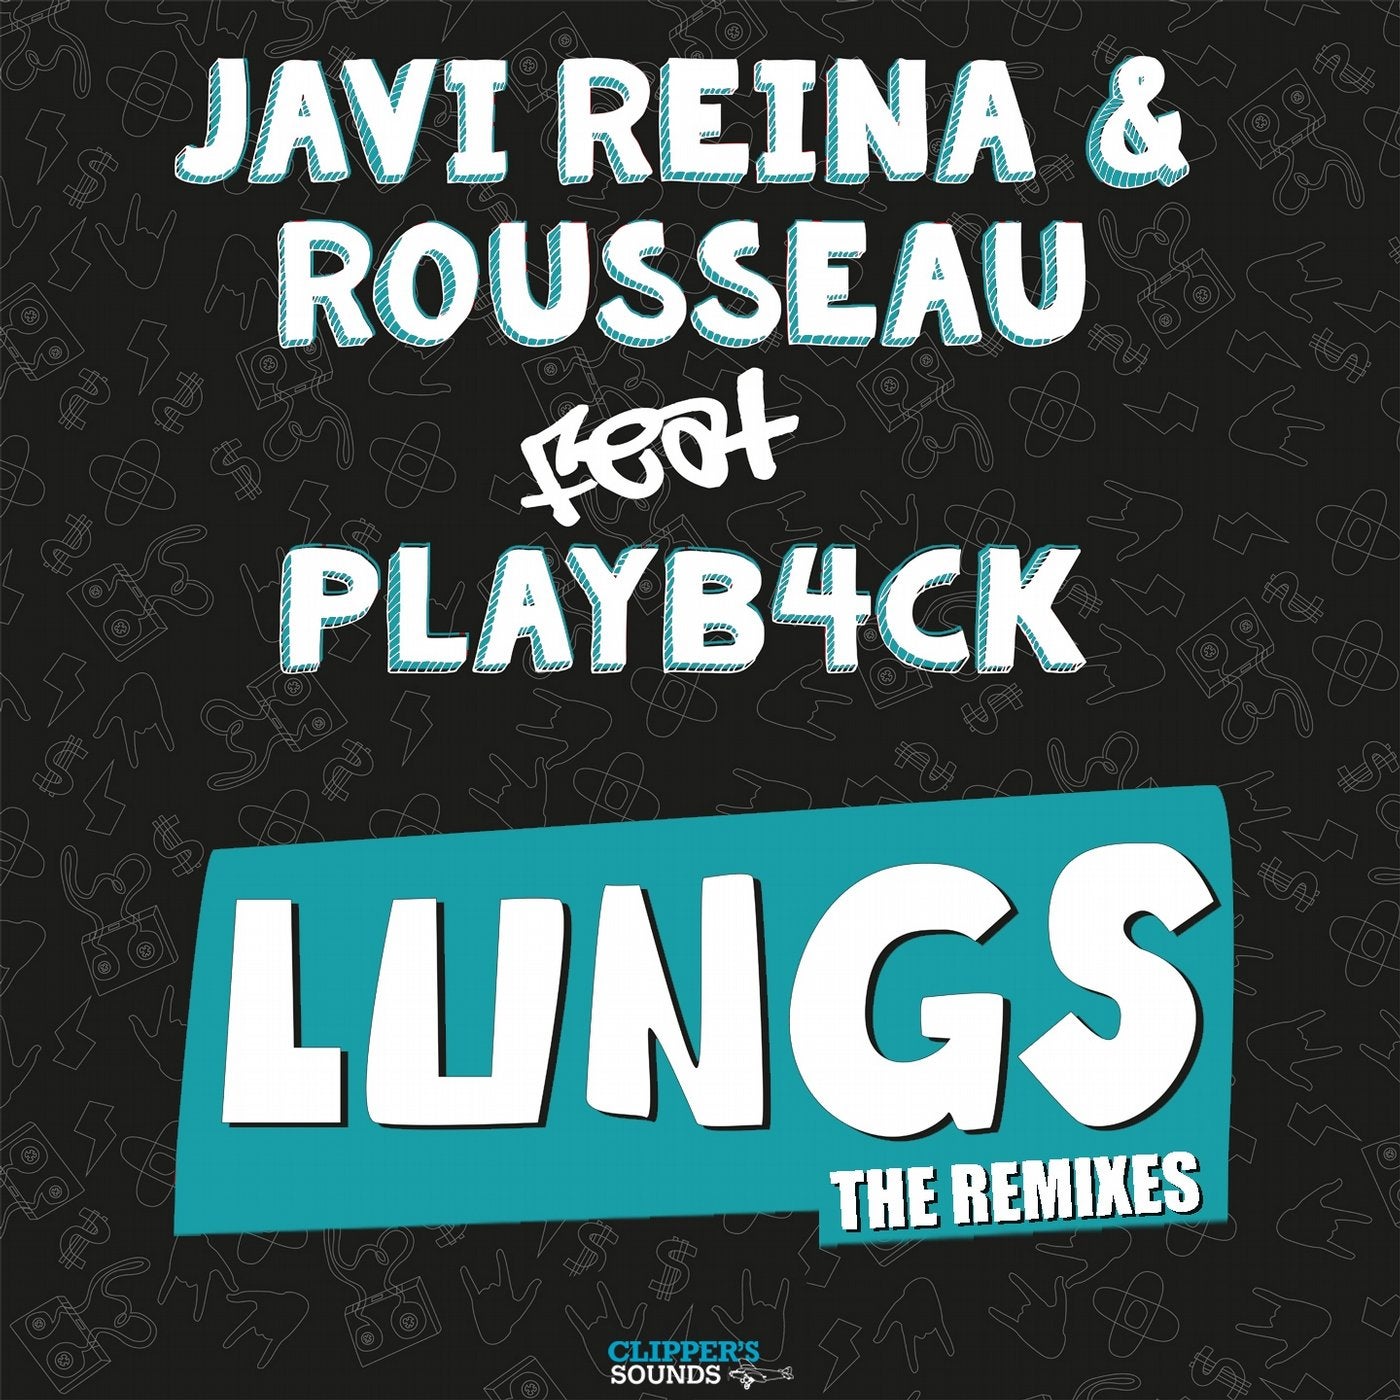 Lungs (feat. Playb4ck) [Remixes]